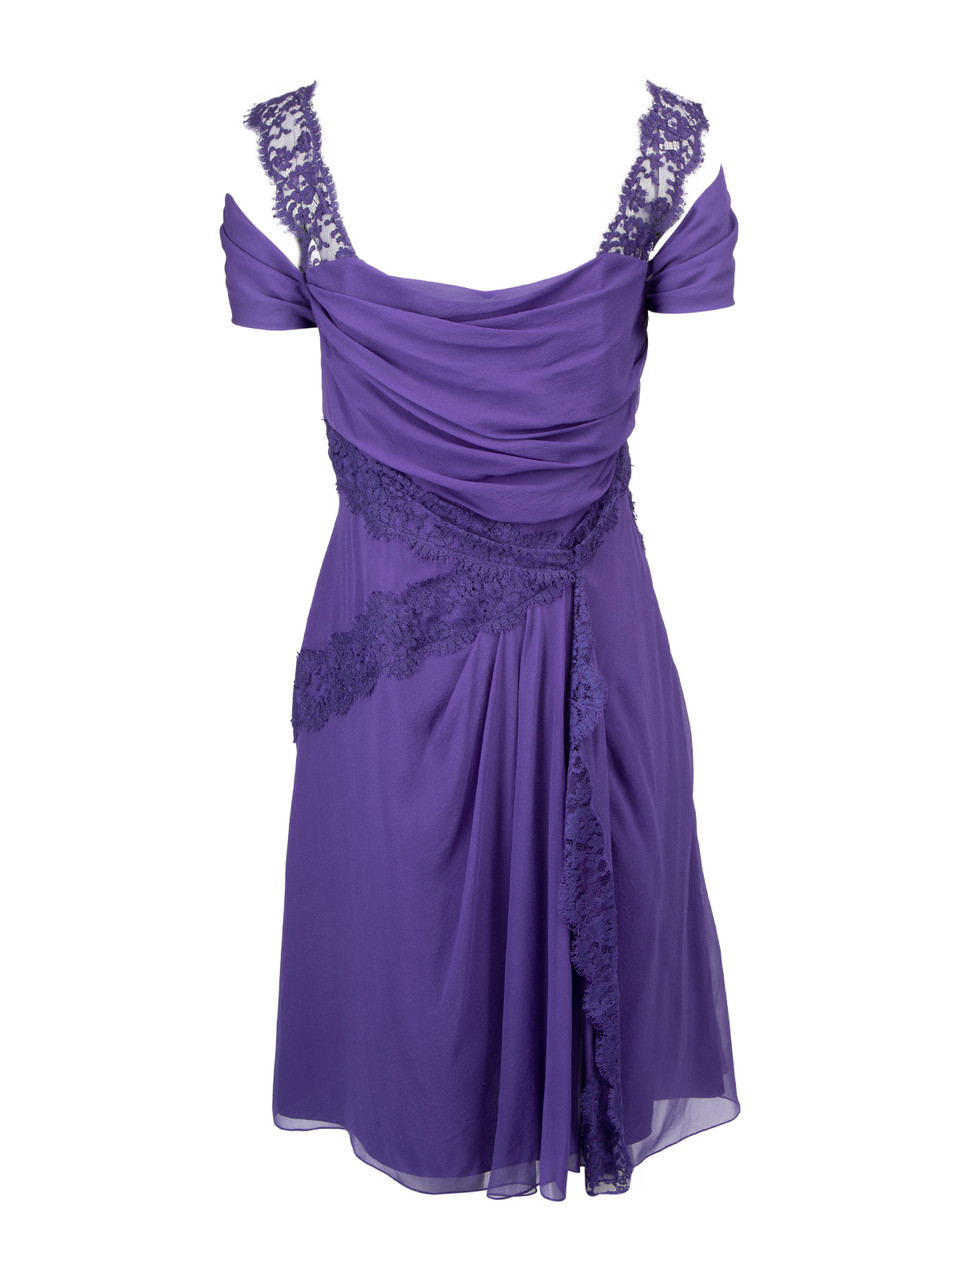 Alberta Ferretti Multi Layer Round Neck Dress with Lace Details